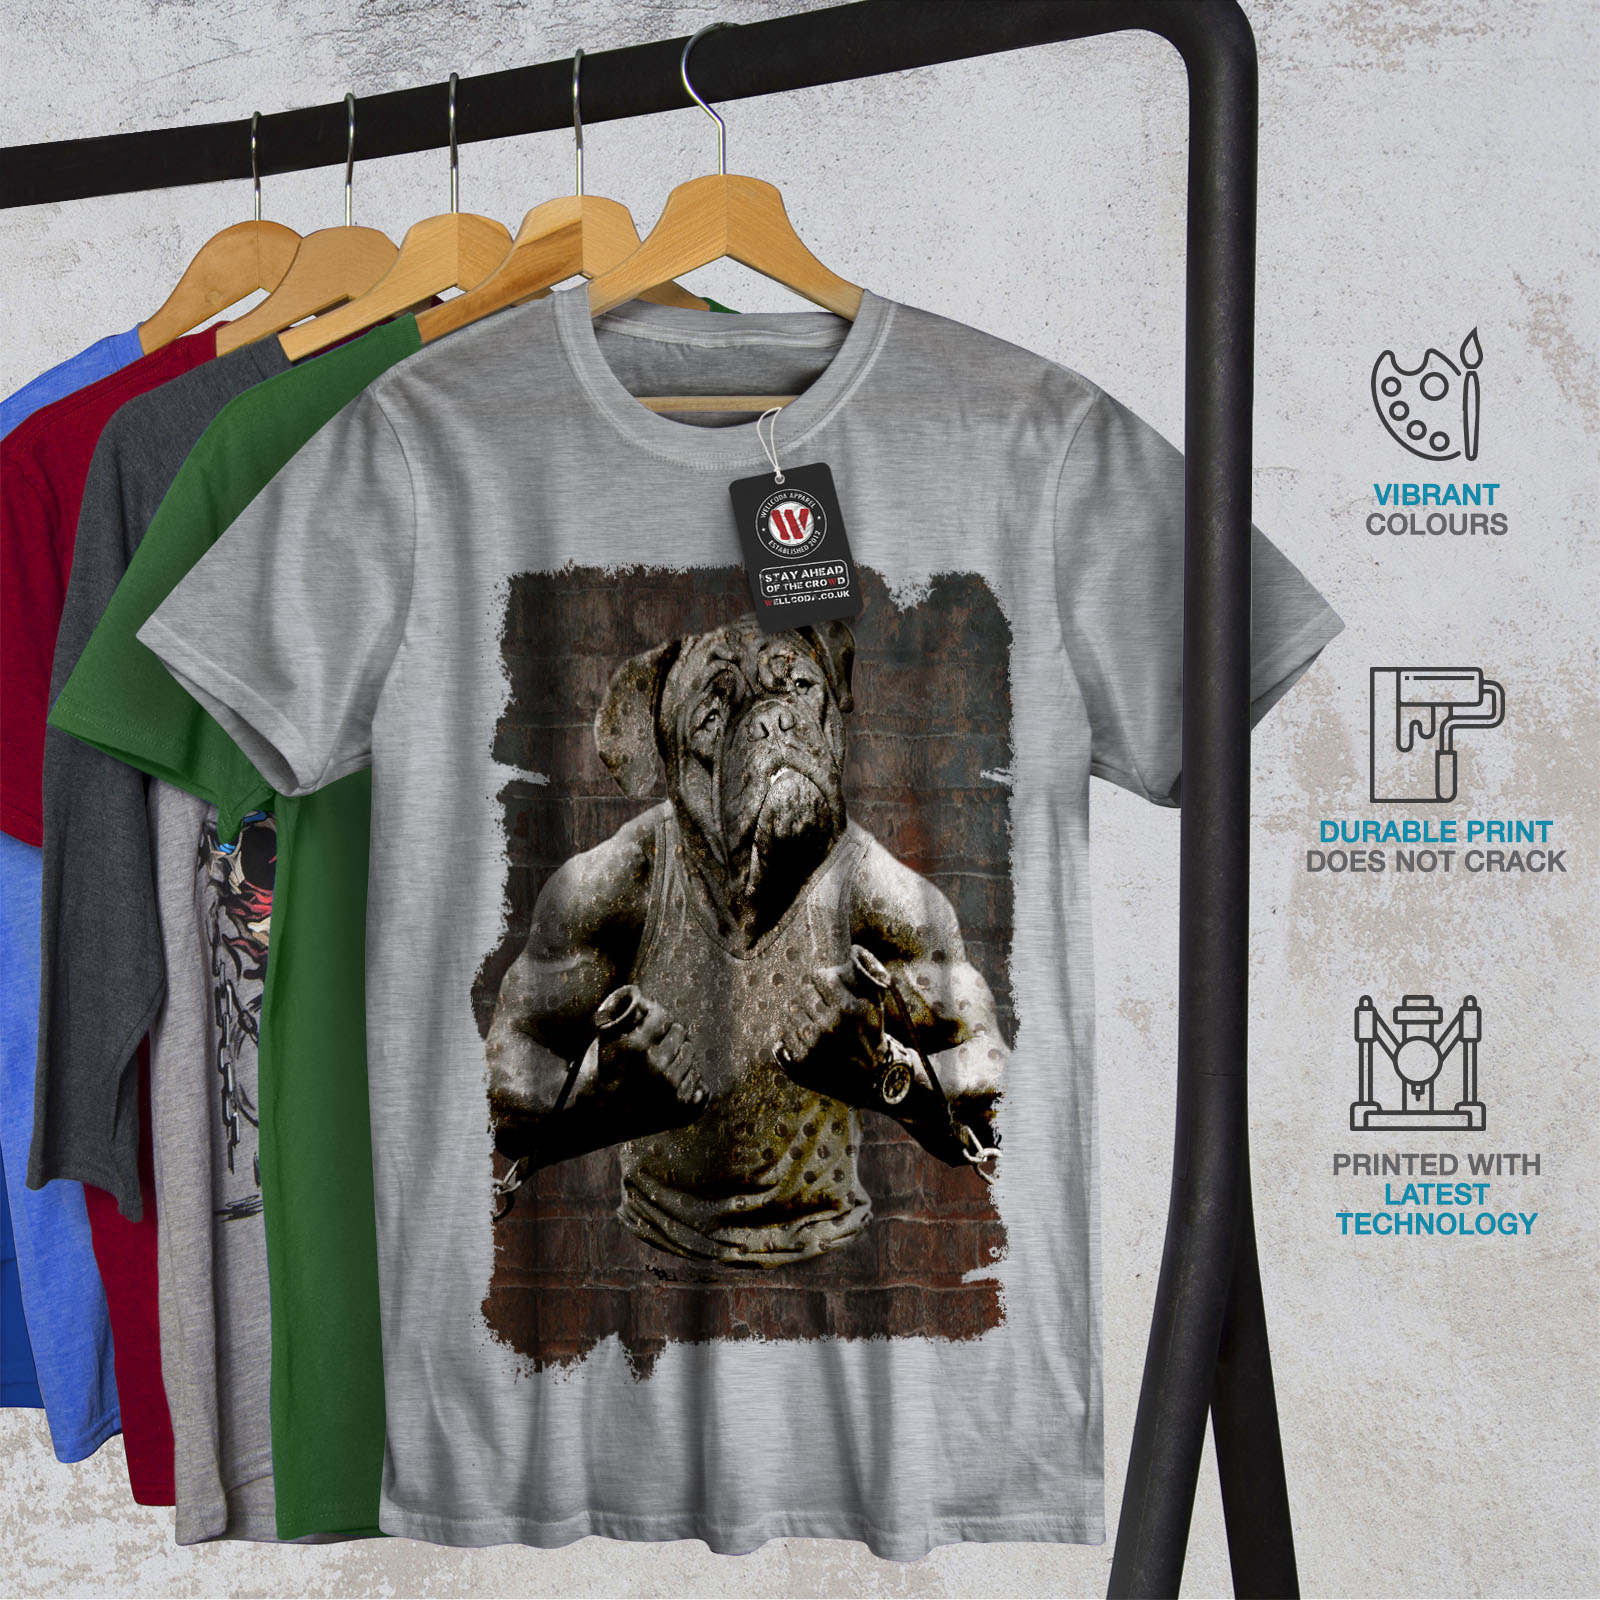 Download Wellcoda Bulldog Gym Workout Mens T-shirt, Weird Graphic Design Printed Tee | eBay